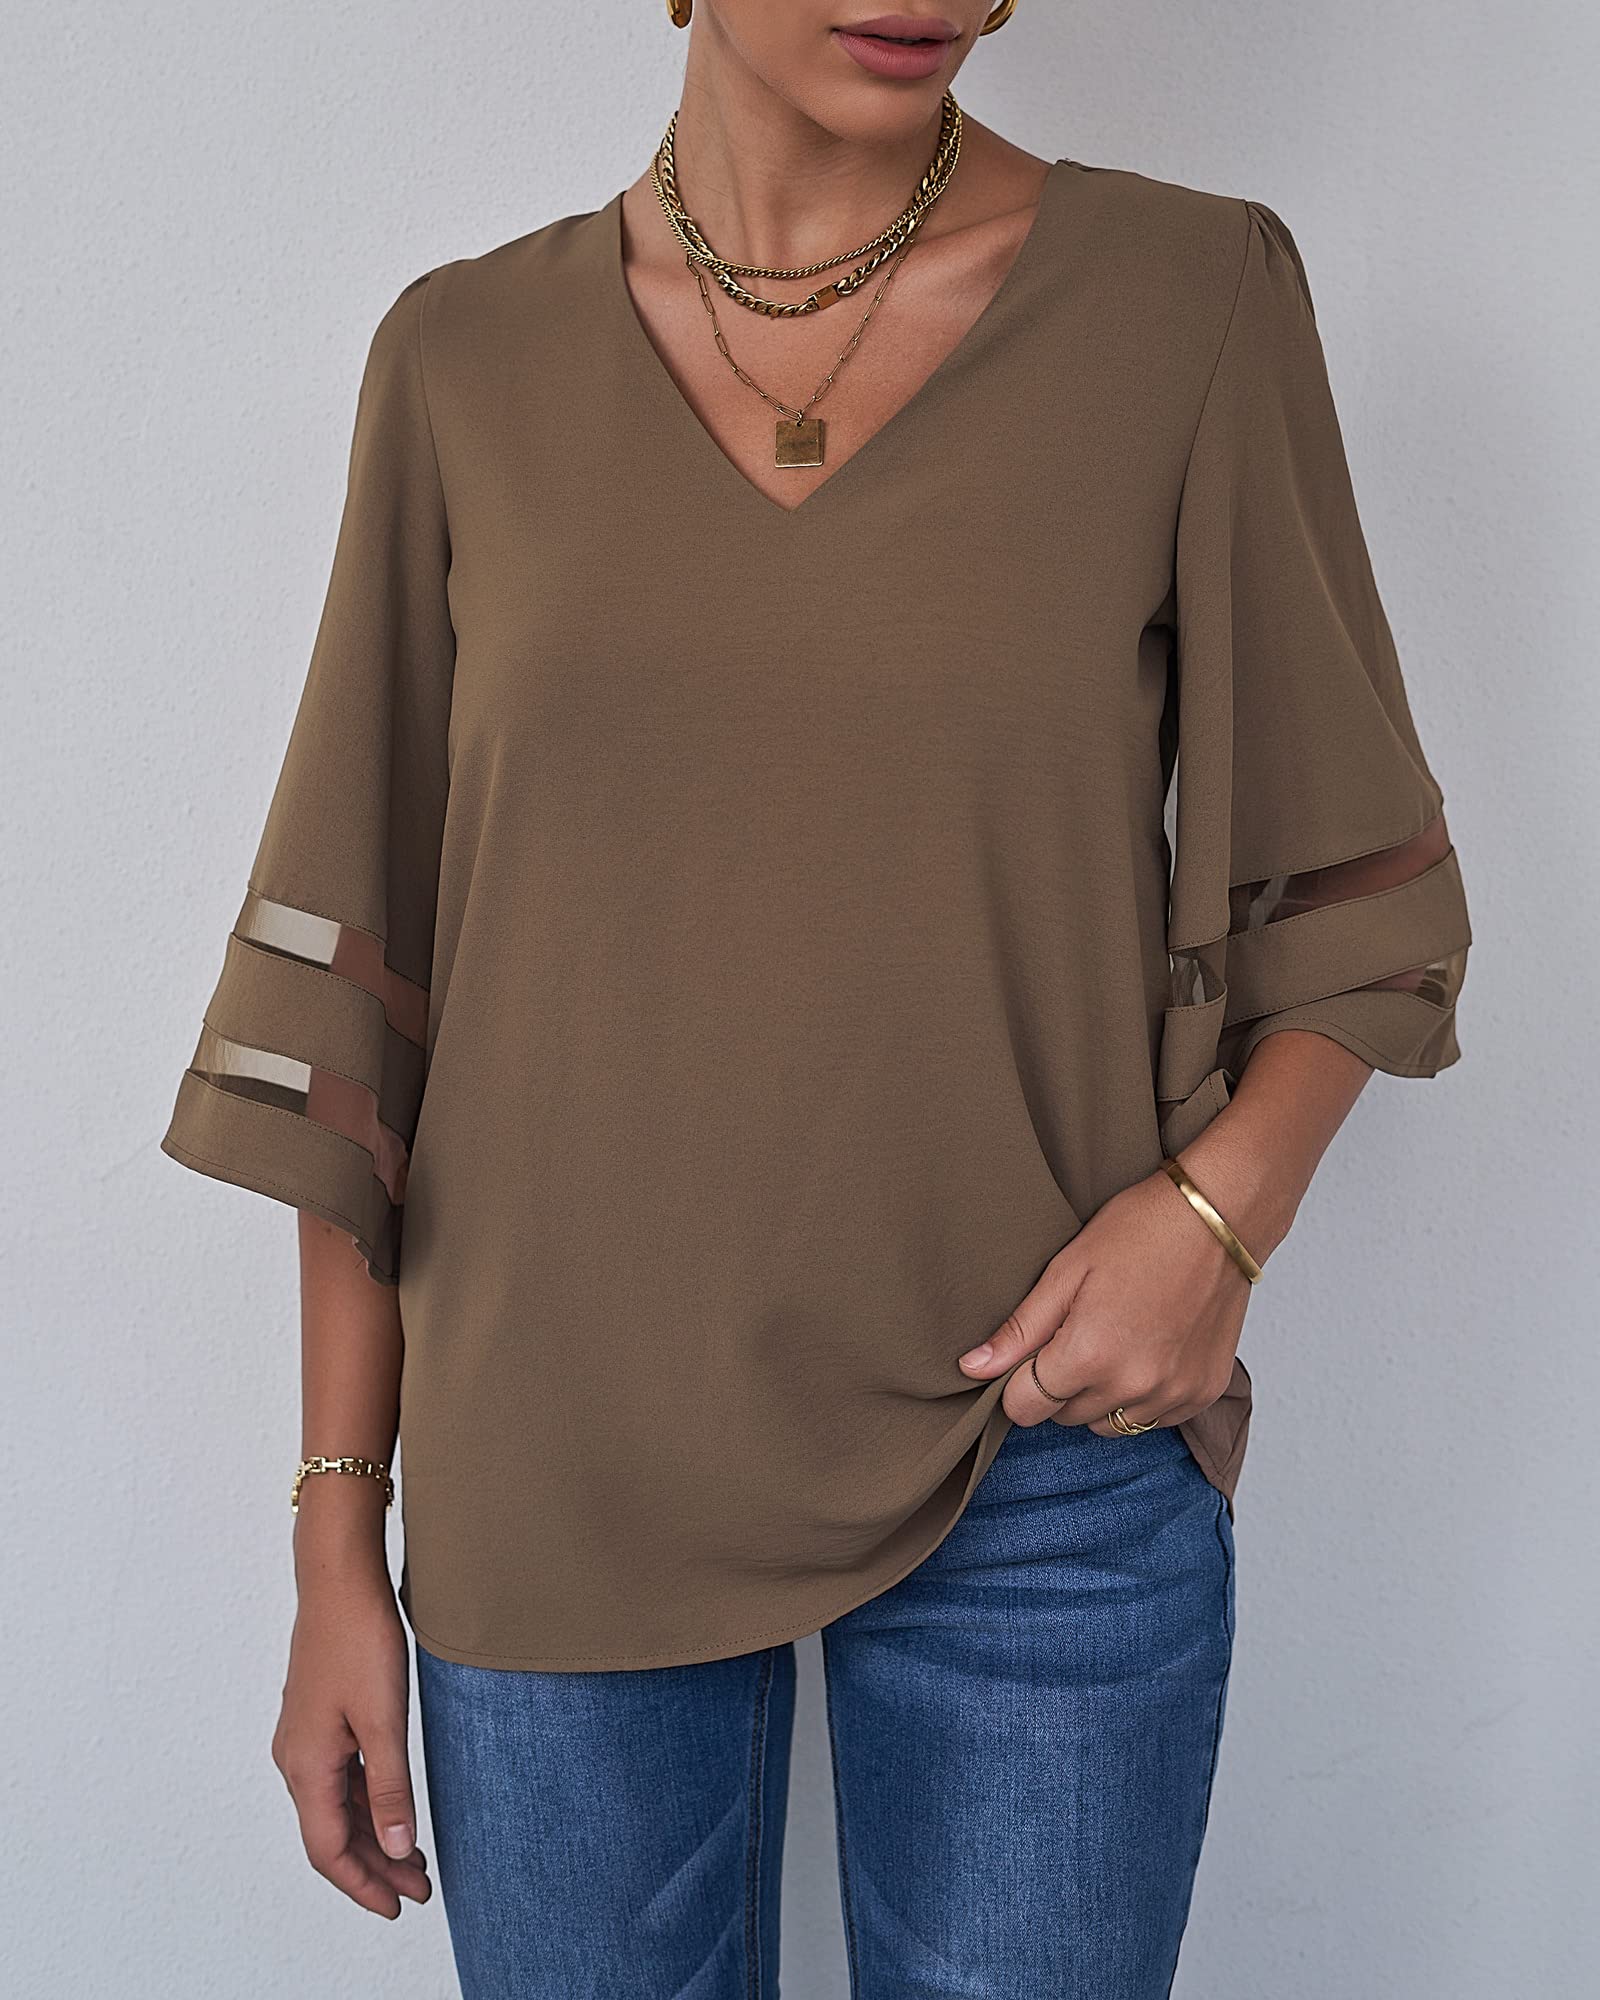 LookbookStore Women's V Neck Mesh Panel Blouse 3/4 Bell Sleeve Loose Top Shirt